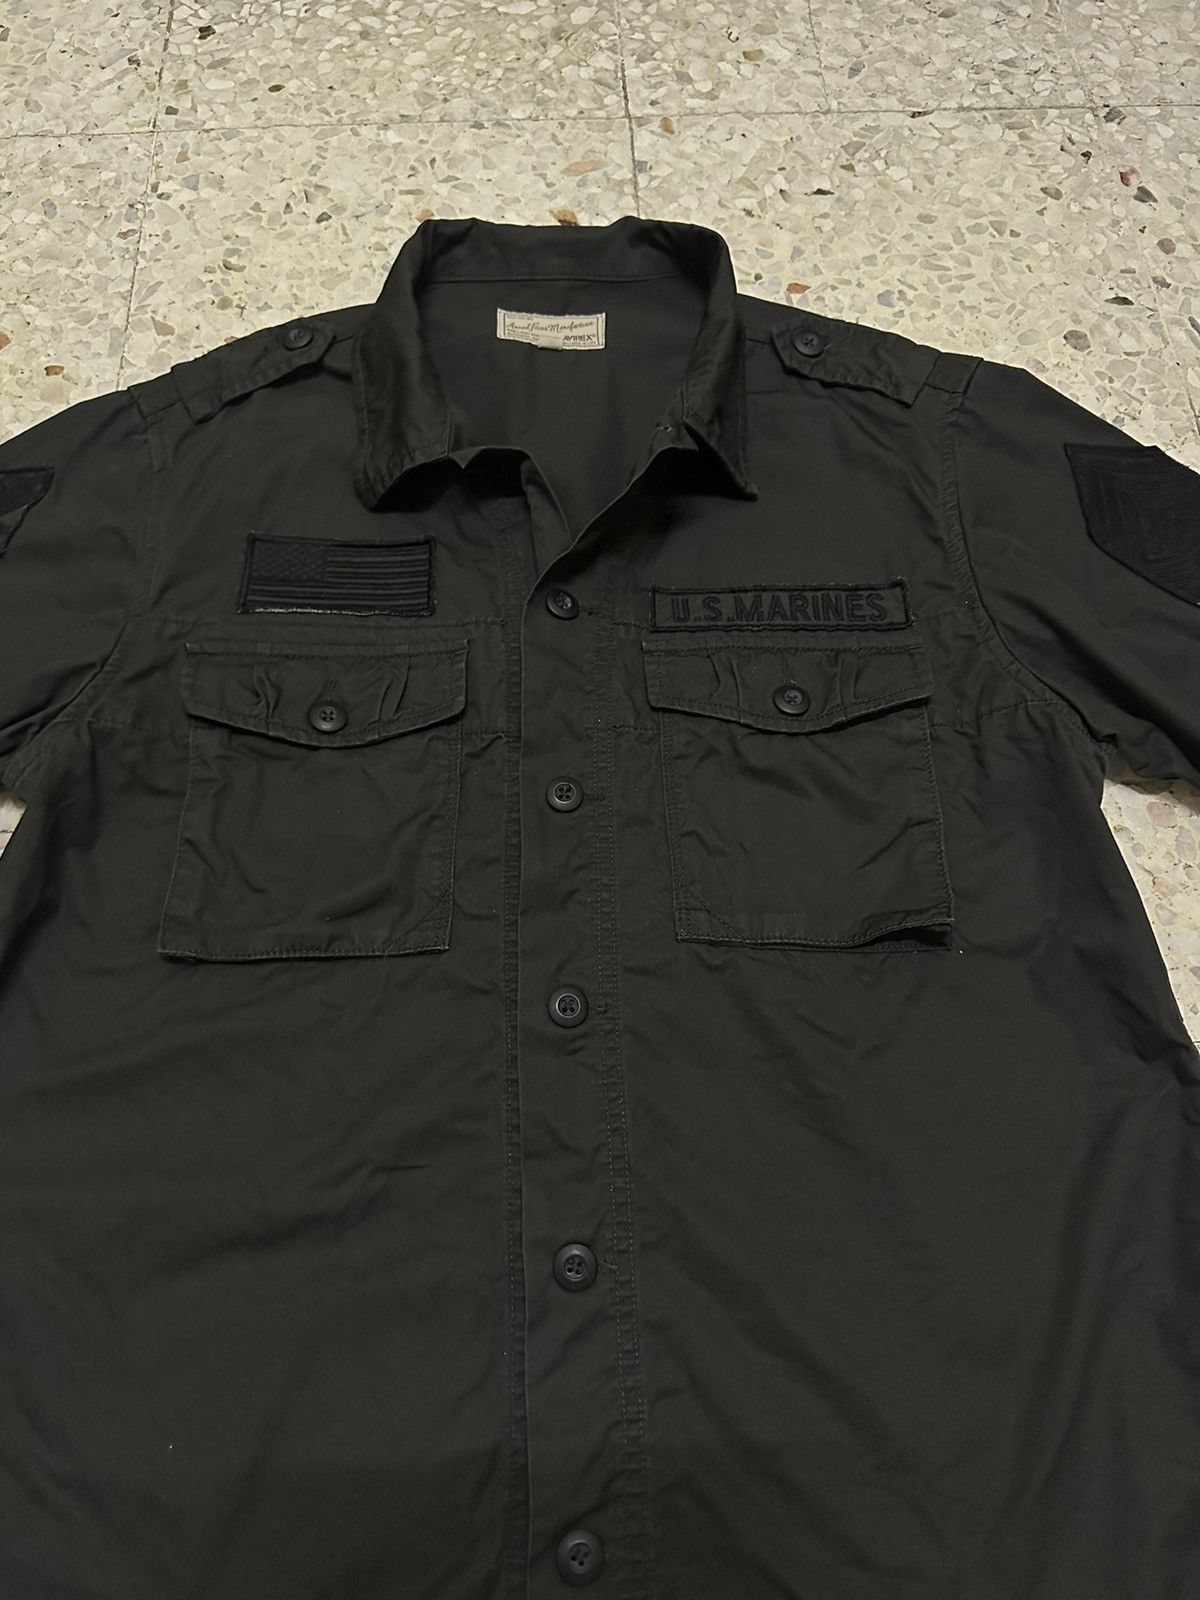 Avirex Button Up Shirt Military Design US Marines Us Flag - 3